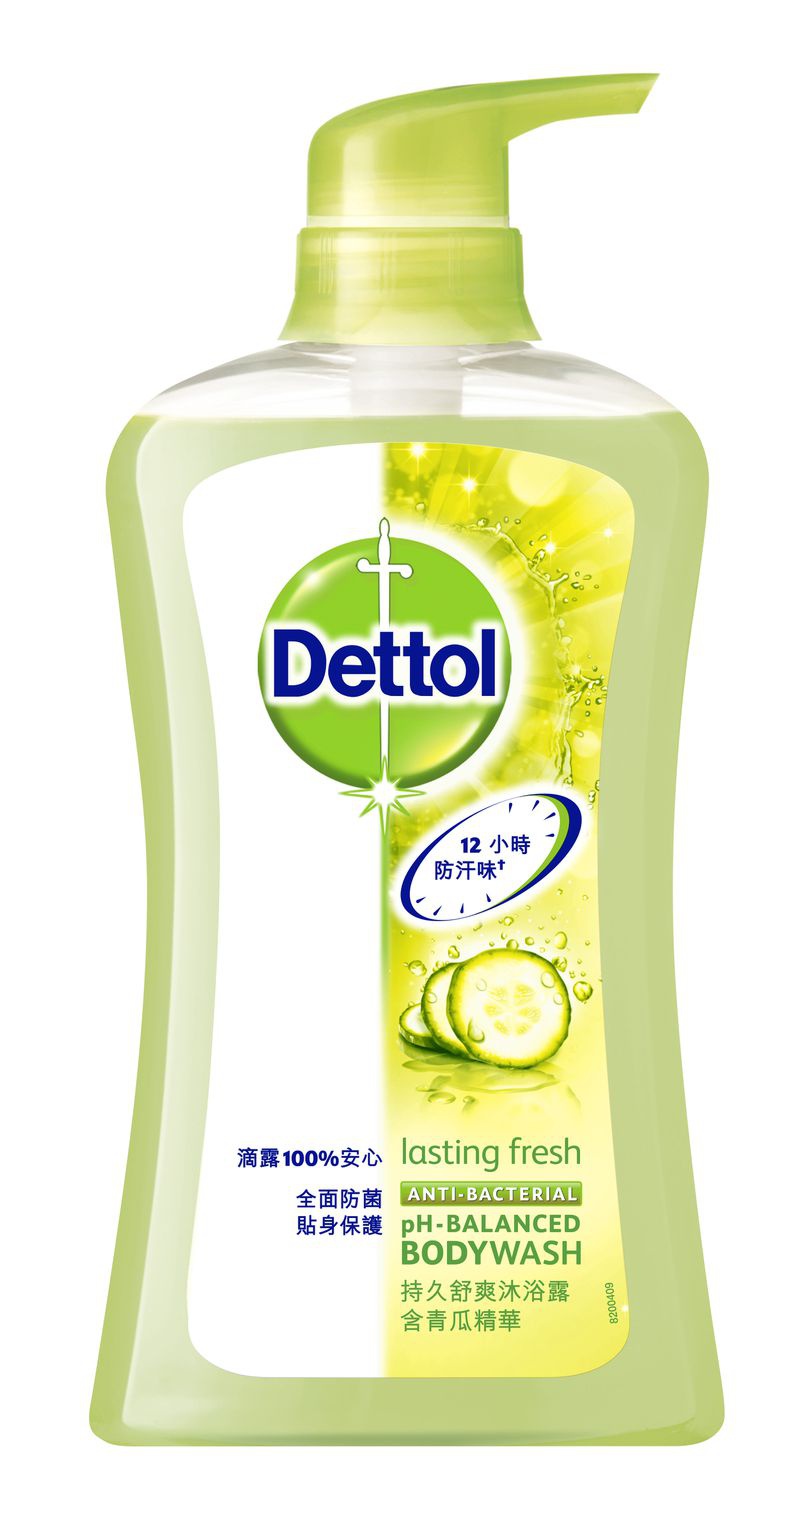 Dettol Anti-bacterial Lasting Fresh Bodywash